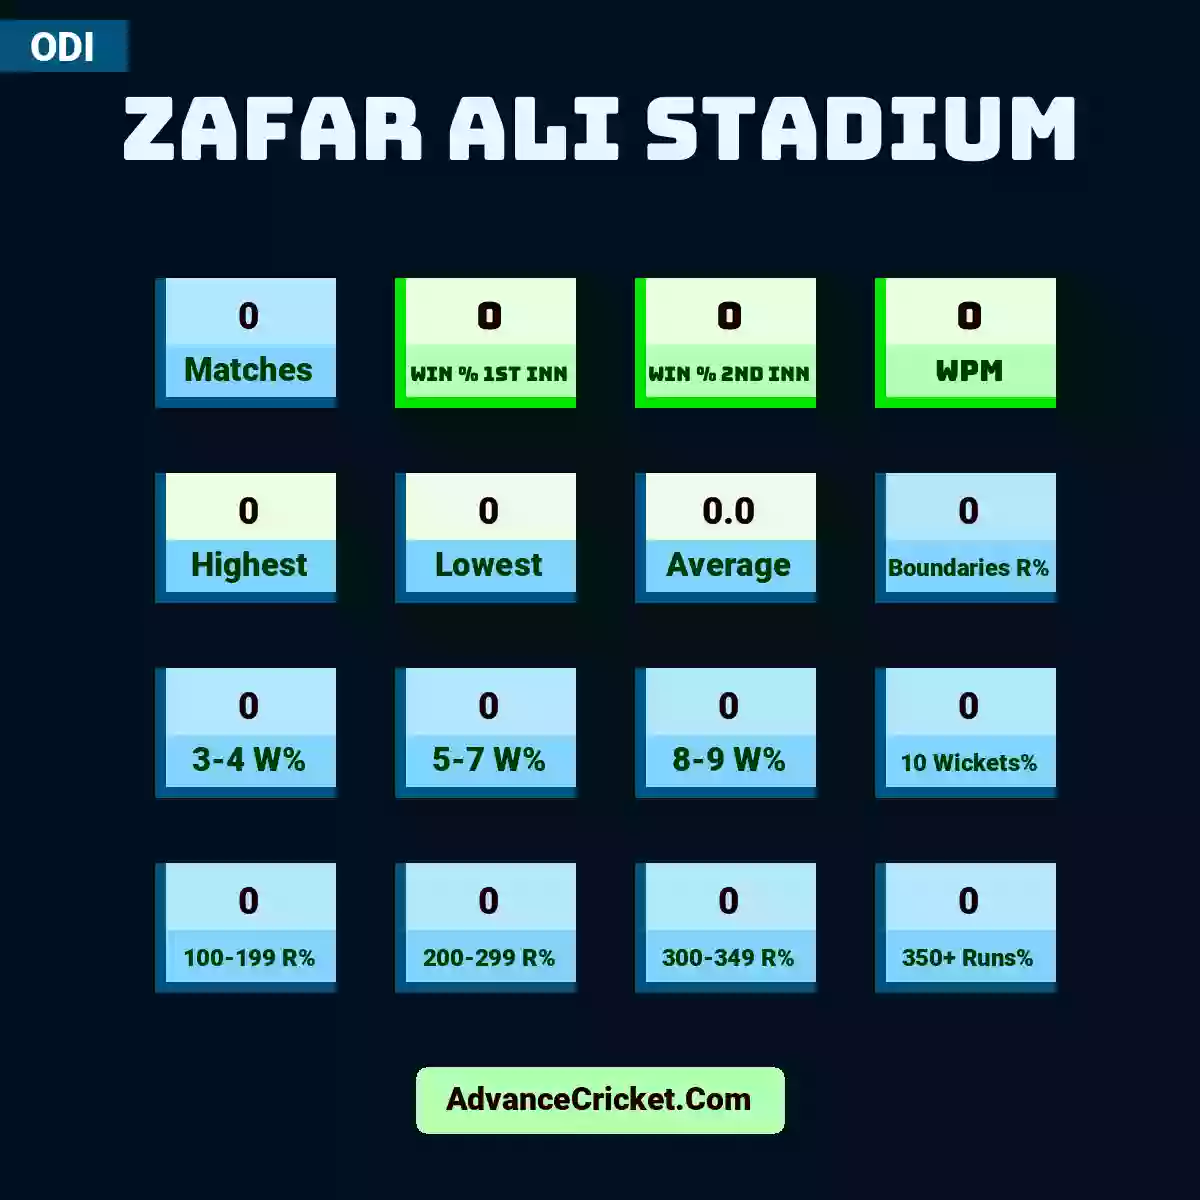 Image showing Zafar Ali Stadium with Matches: 0, Win % 1st Inn: 0, Win % 2nd Inn: 0, WPM: 0, Highest: 0, Lowest: 0, Average: 0.0, Boundaries R%: 0, 3-4 W%: 0, 5-7 W%: 0, 8-9 W%: 0, 10 Wickets%: 0, 100-199 R%: 0, 200-299 R%: 0, 300-349 R%: 0, 350+ Runs%: 0.